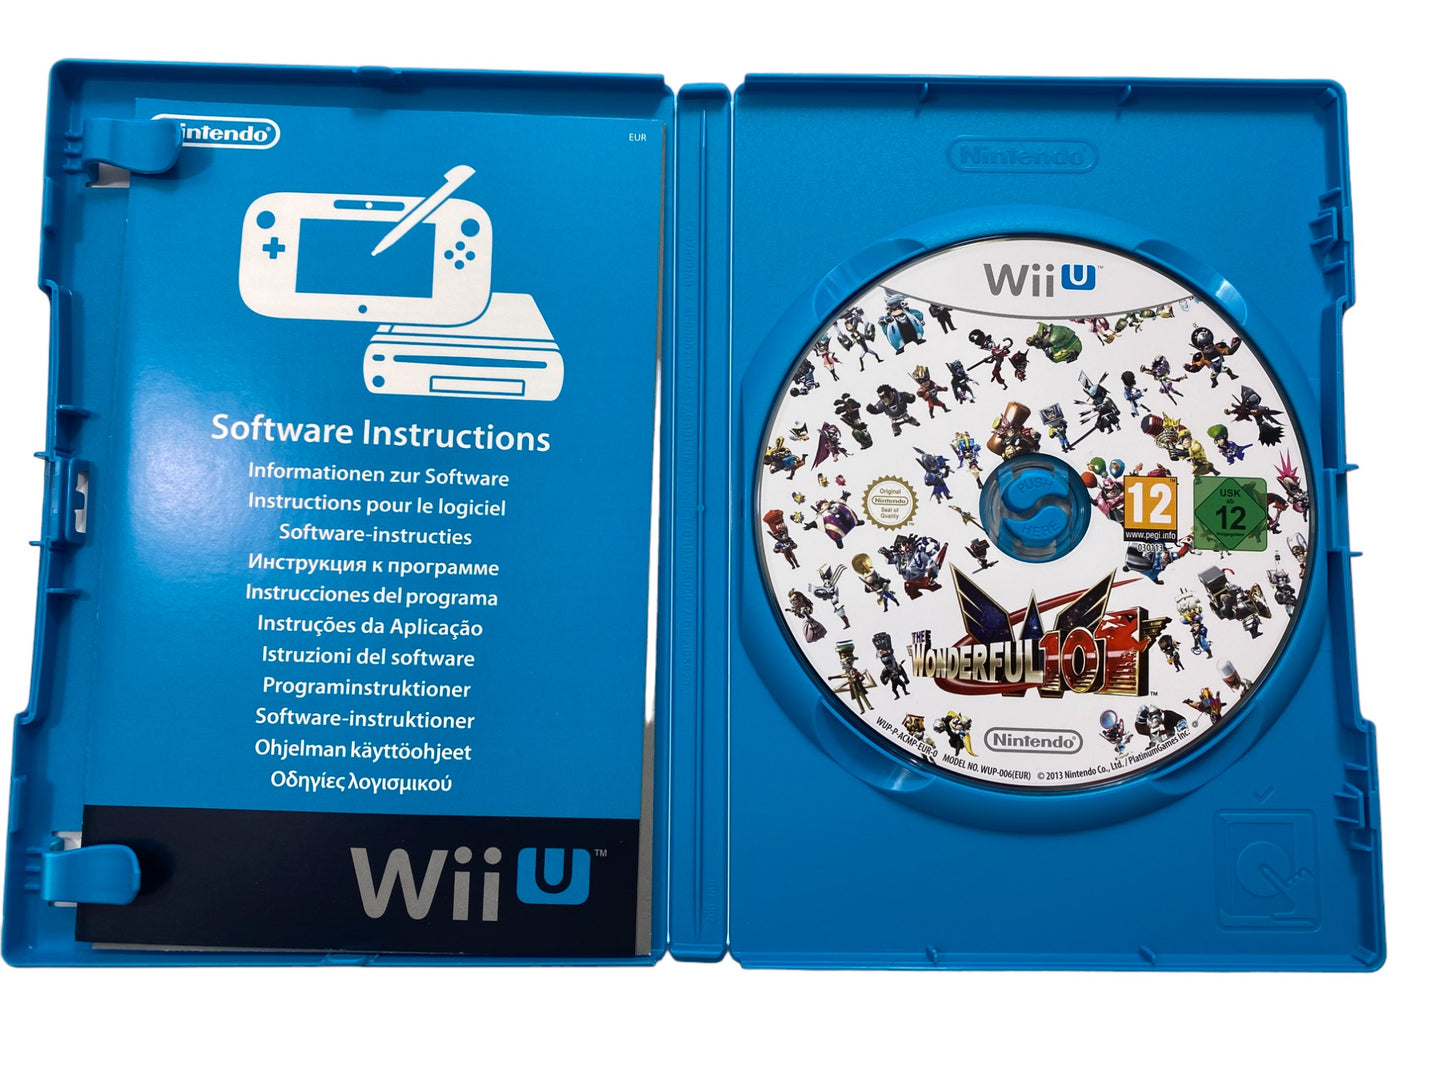 The Wonderful 101 - Nintendo Wii U (CD KRATZFREI)